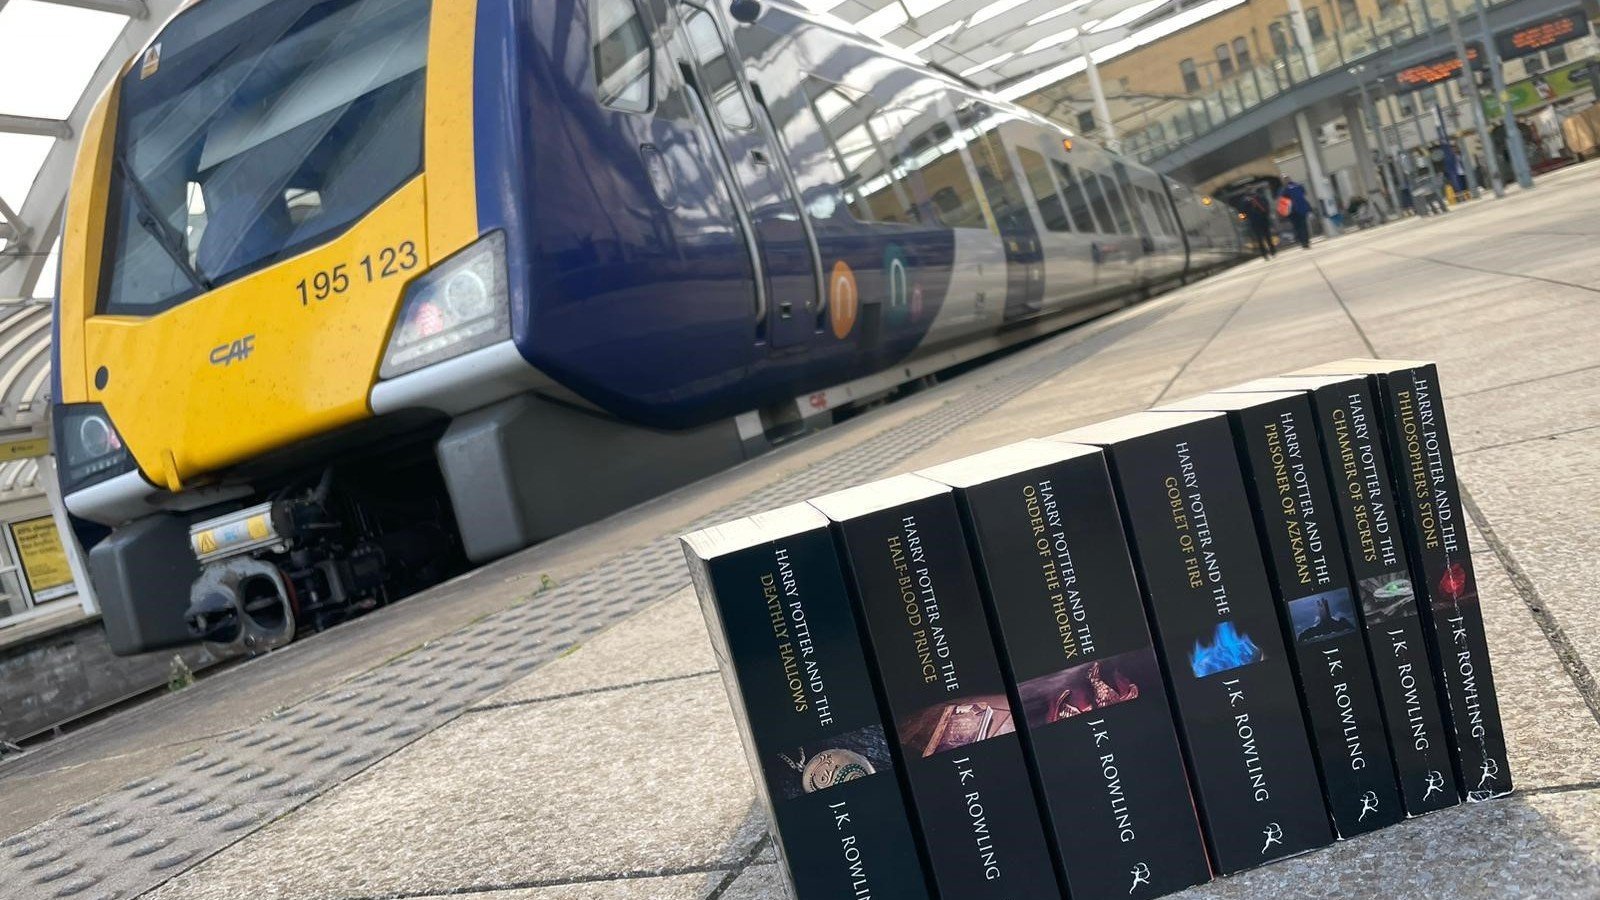 Image shows Harry Potter books alongside Northern train